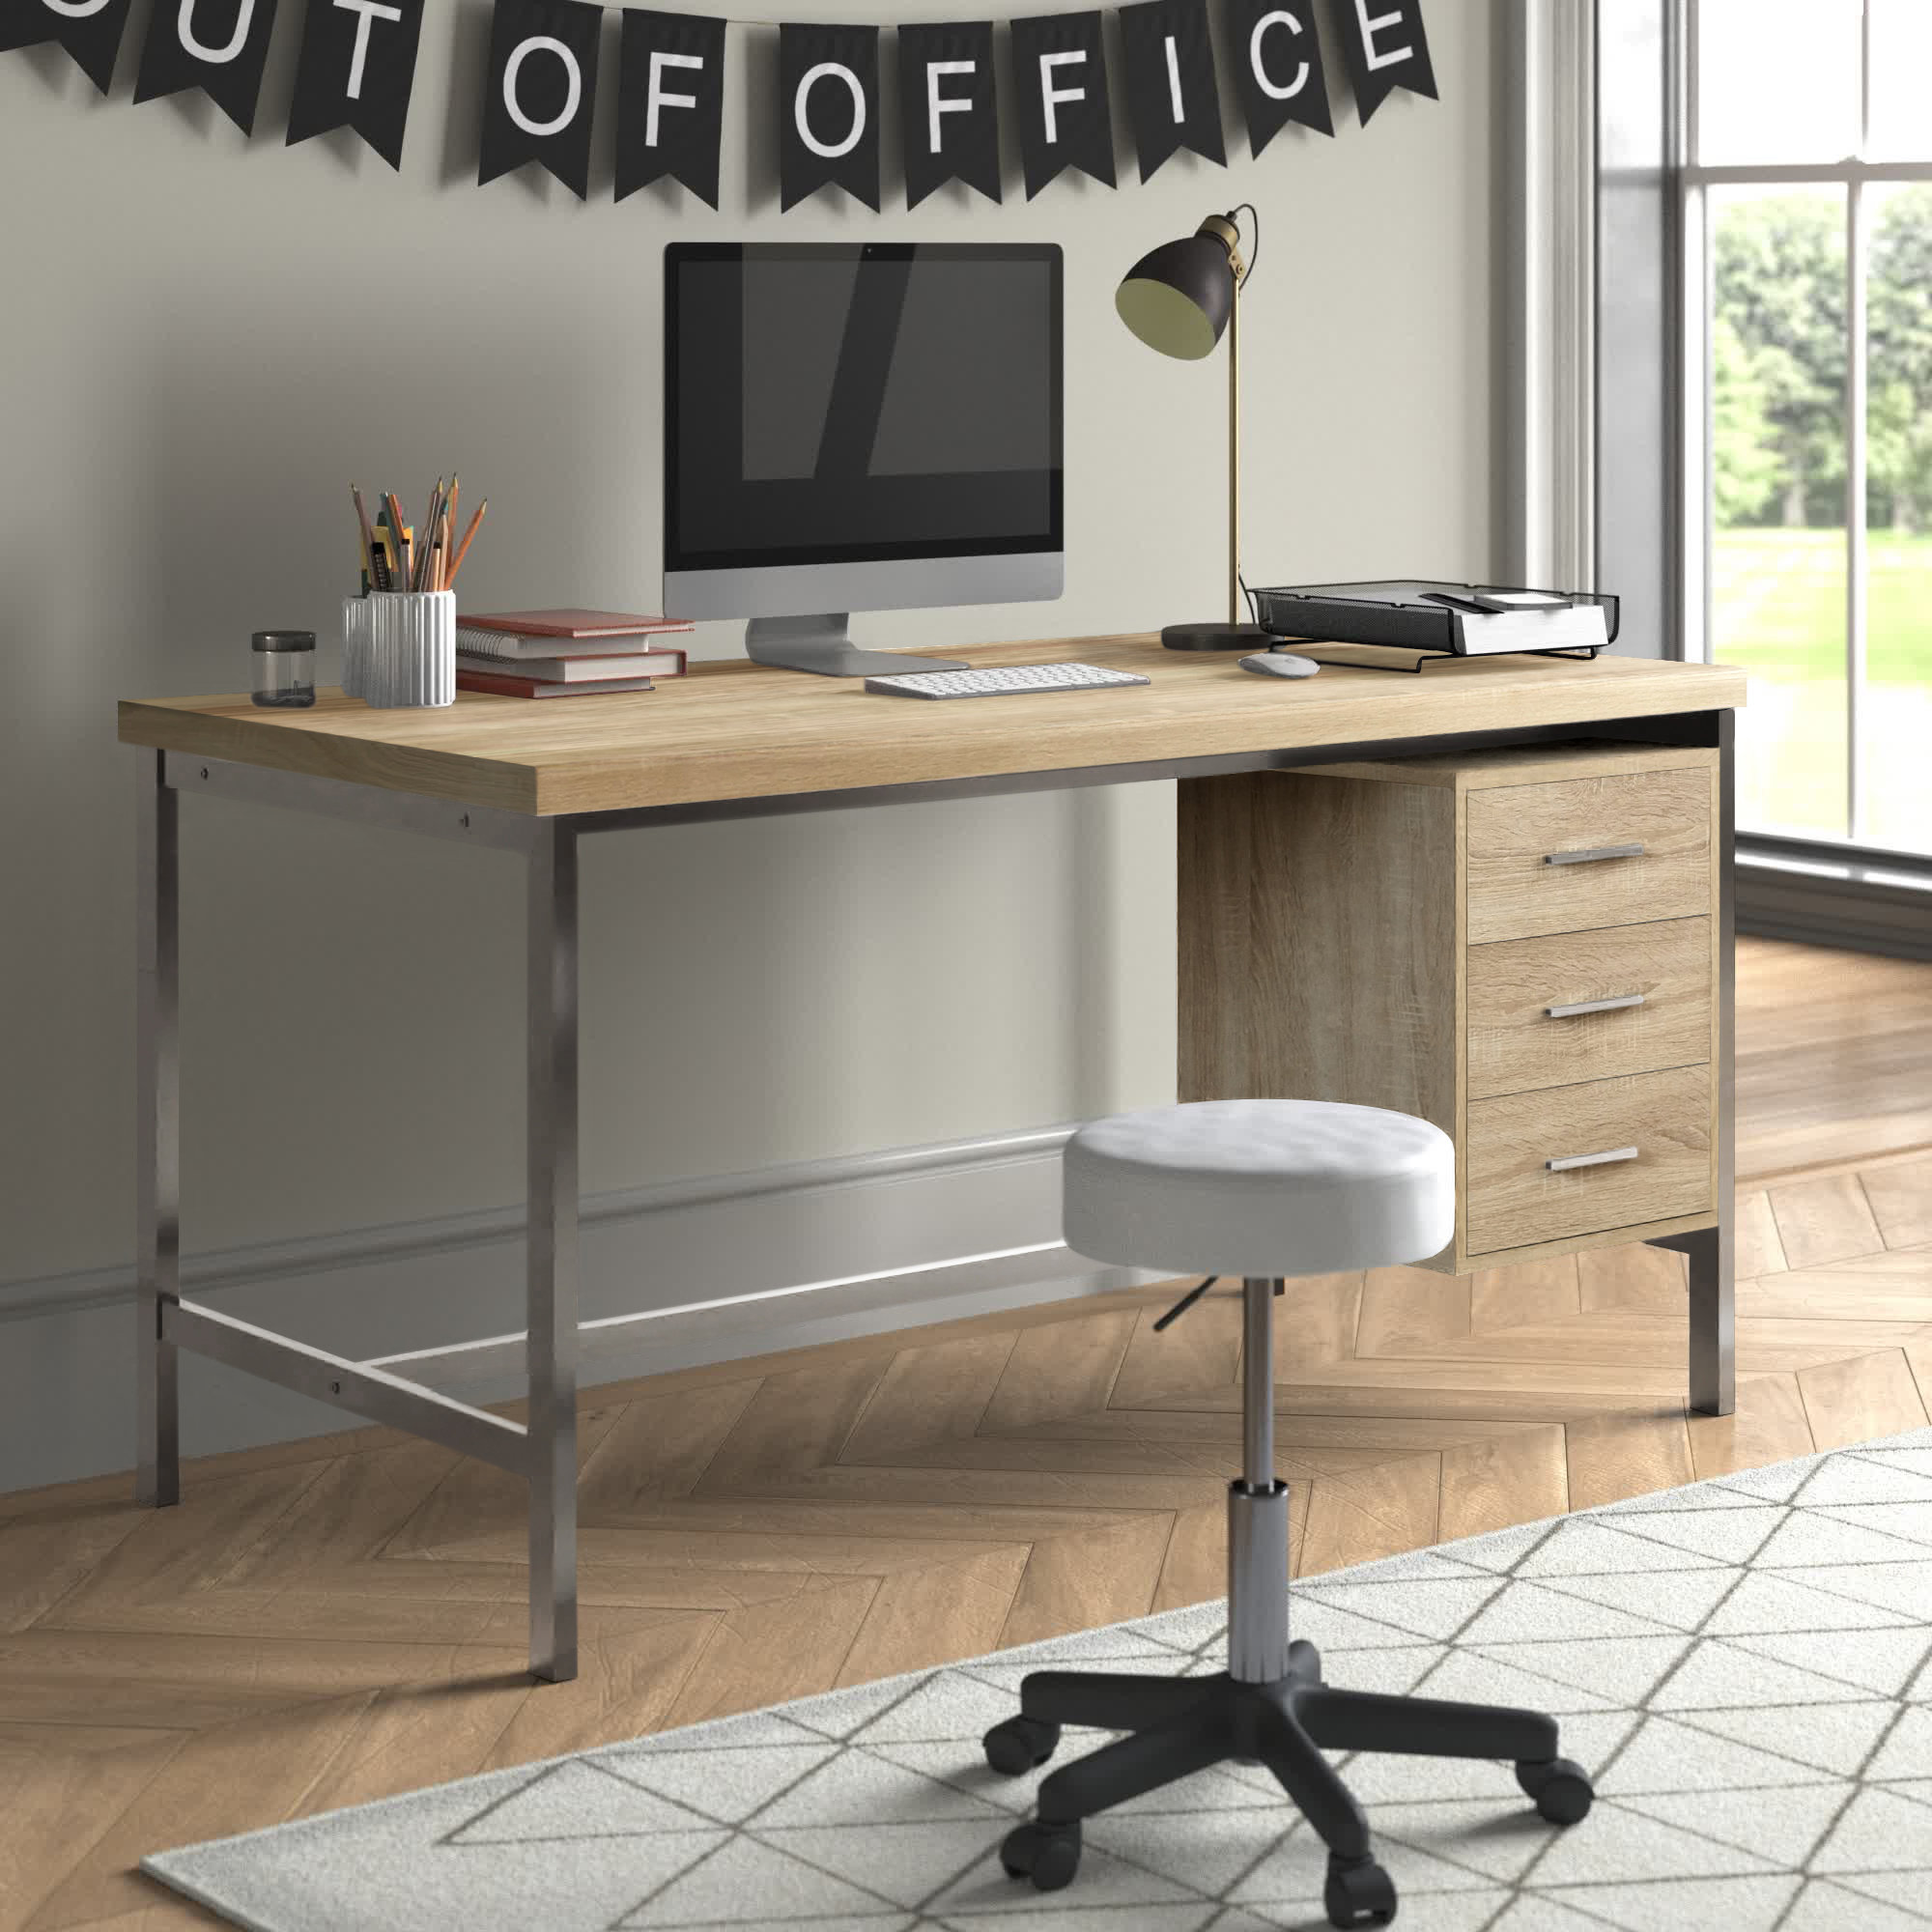 55 Modern White Computer Desk Rectangular Home Office Desk with Pedestal  Base